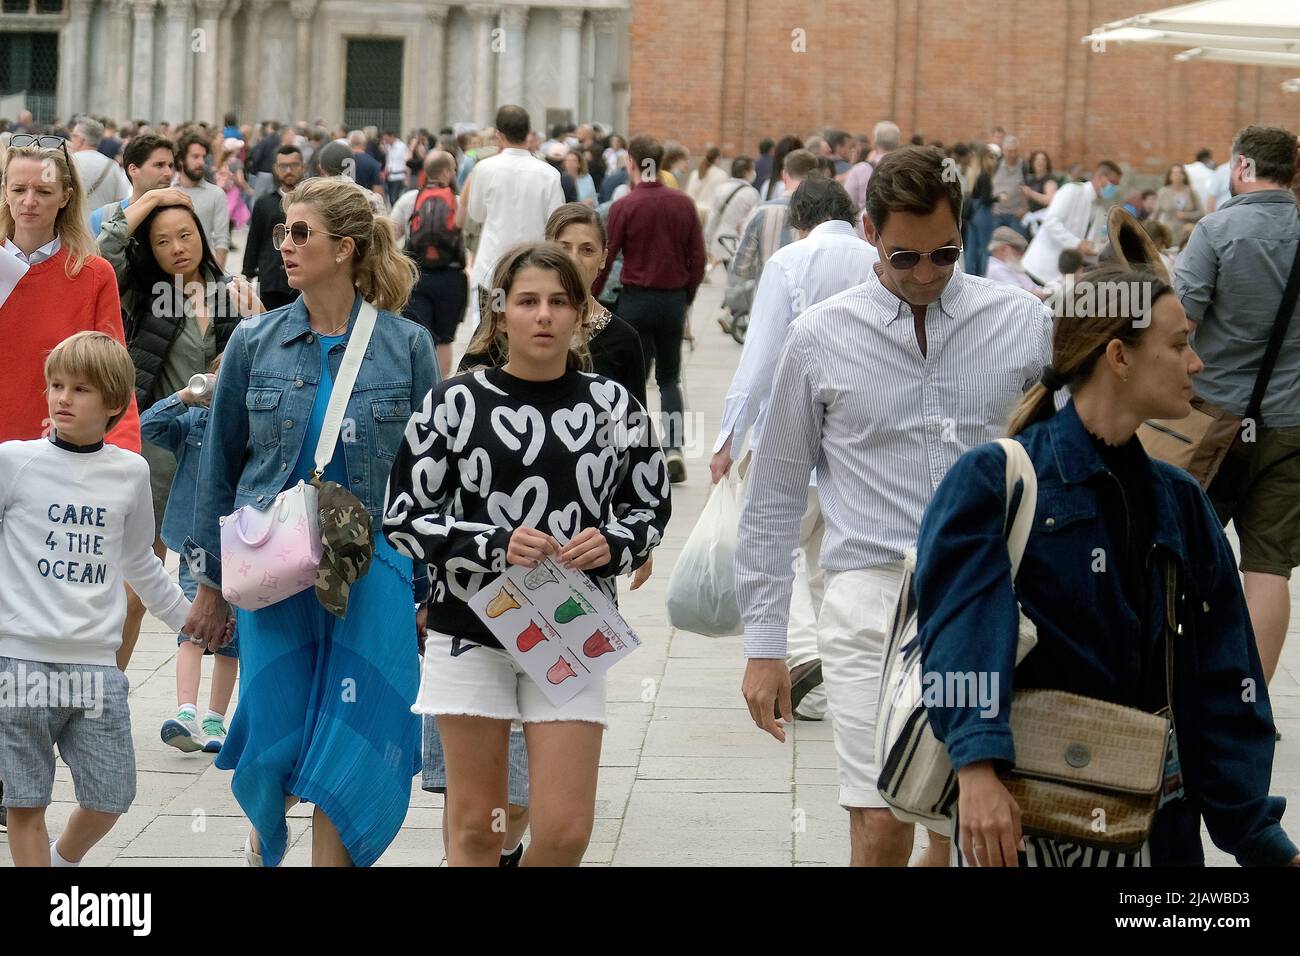 Roger Federer in Venedig mit Familie Stockfotografie - Alamy